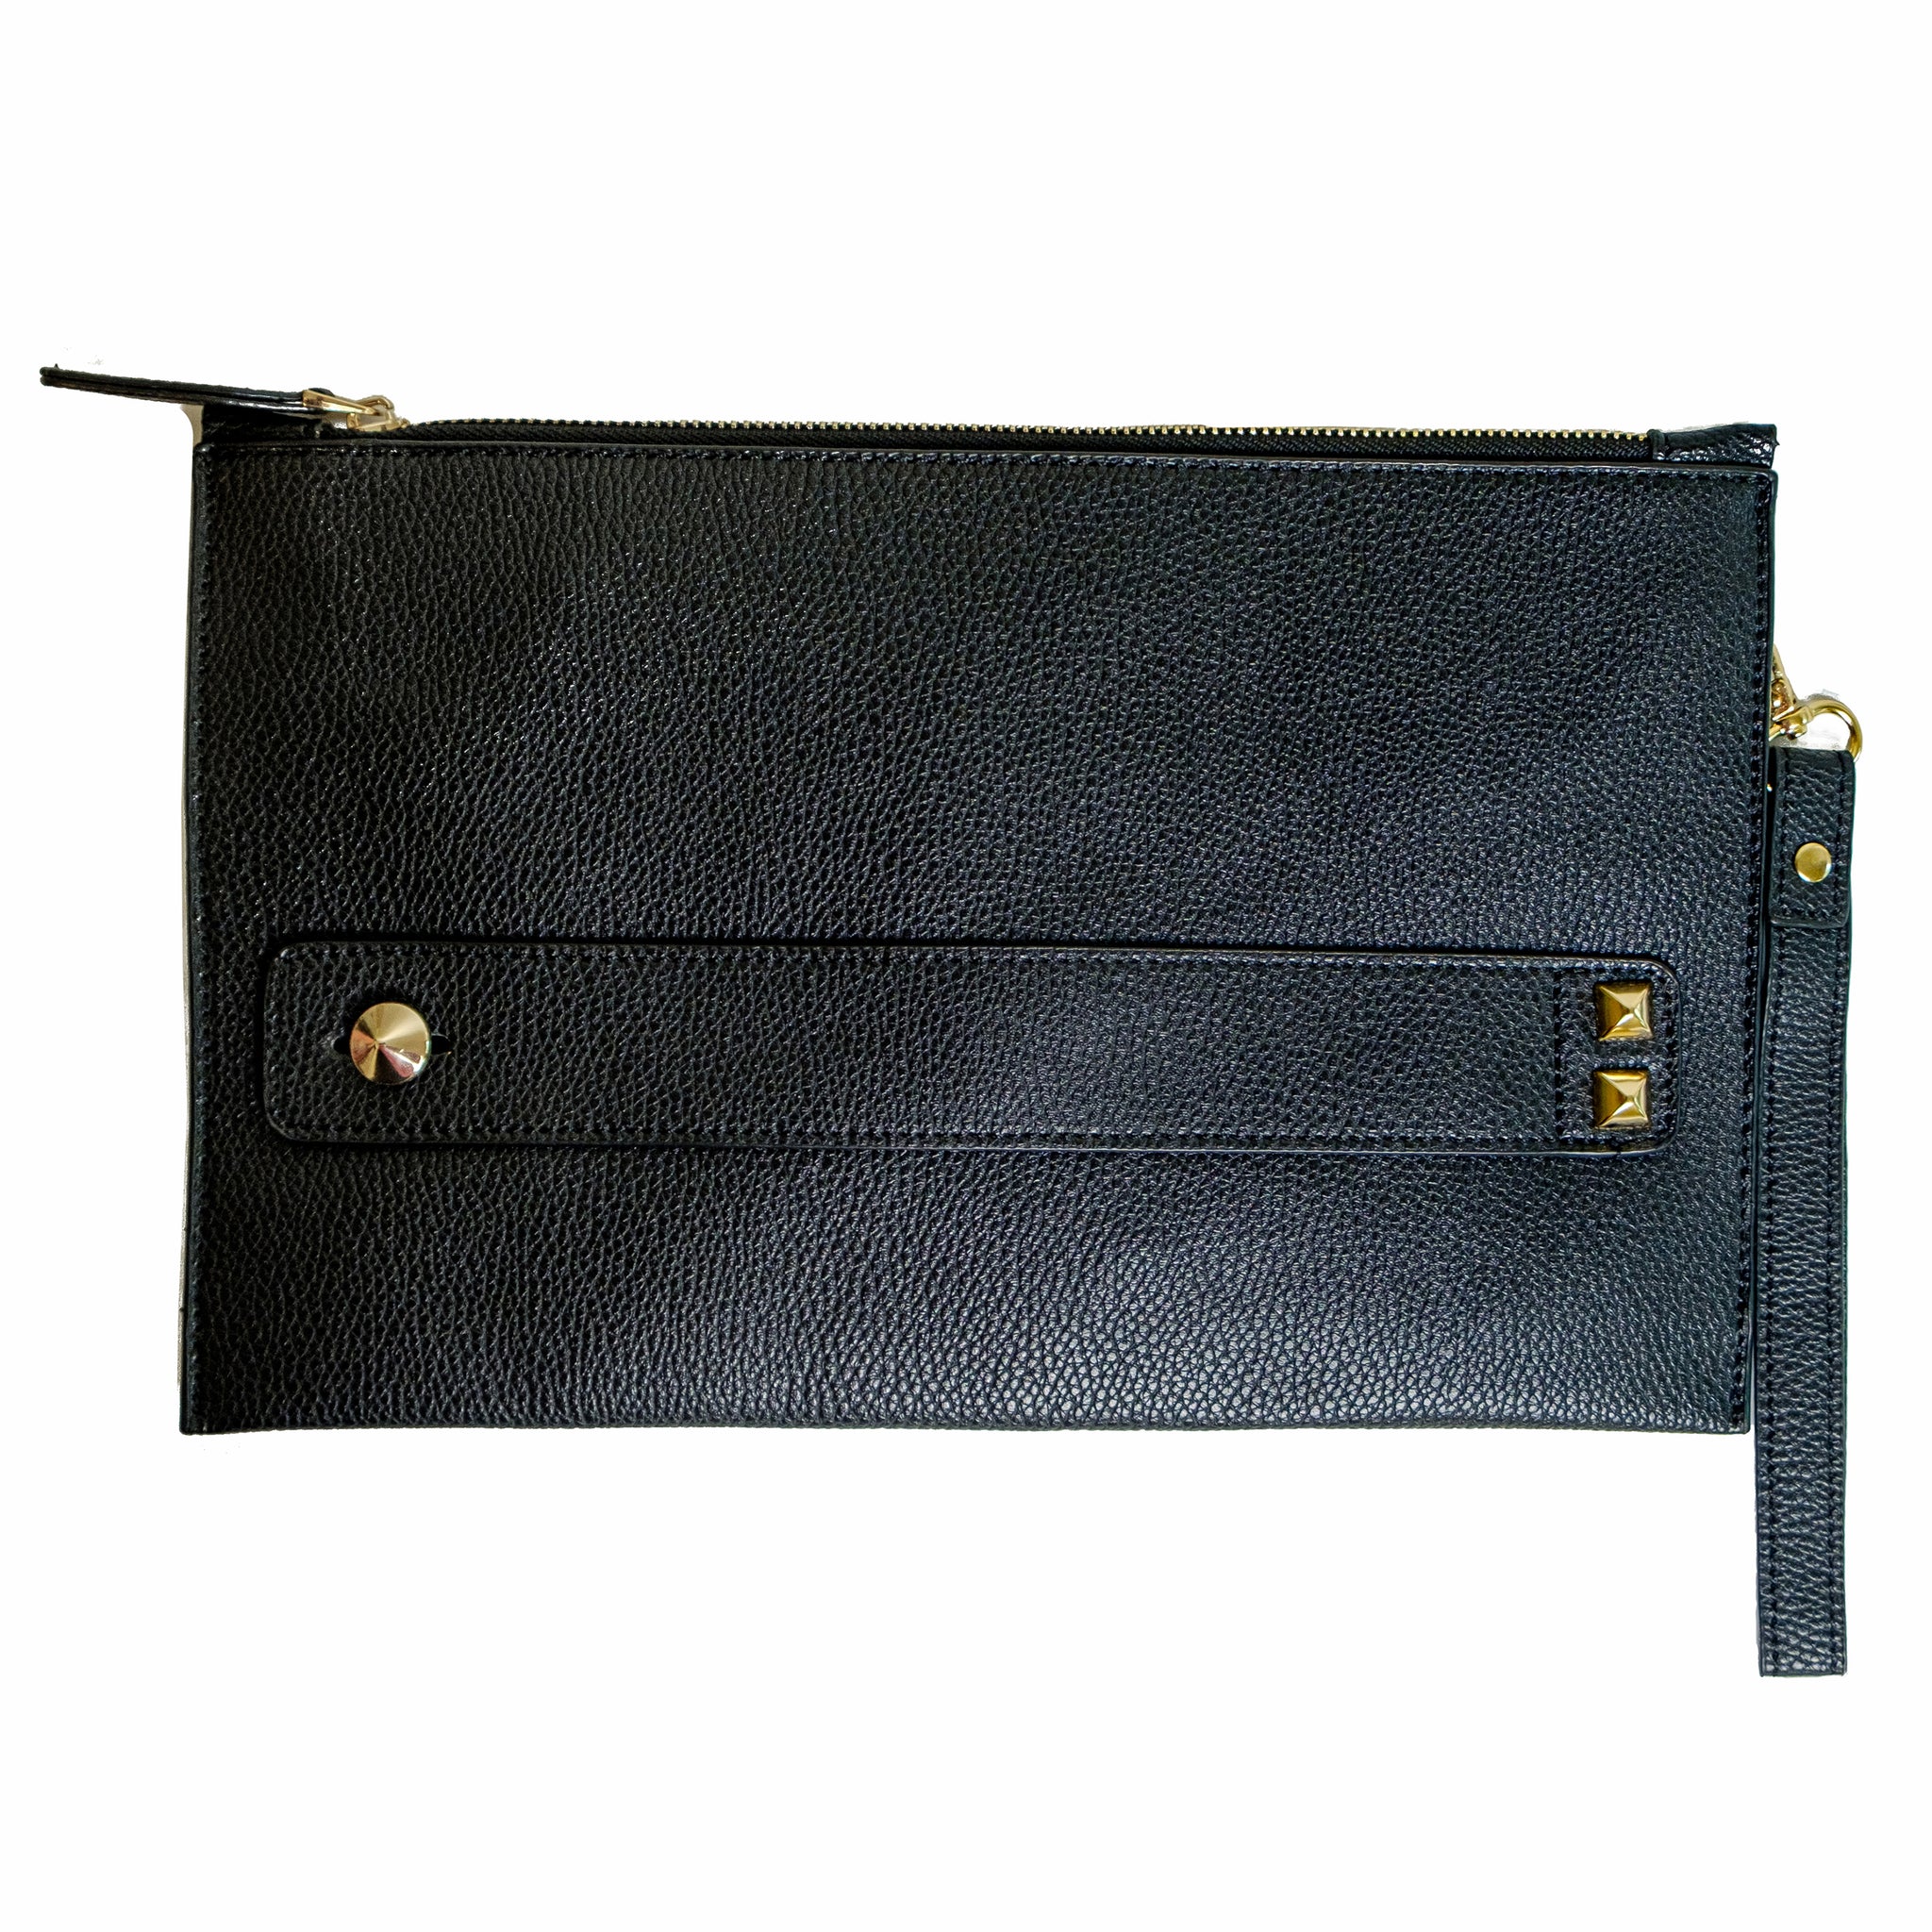 "Chokore Vegan Leather Envelope Clutch (Black)  "